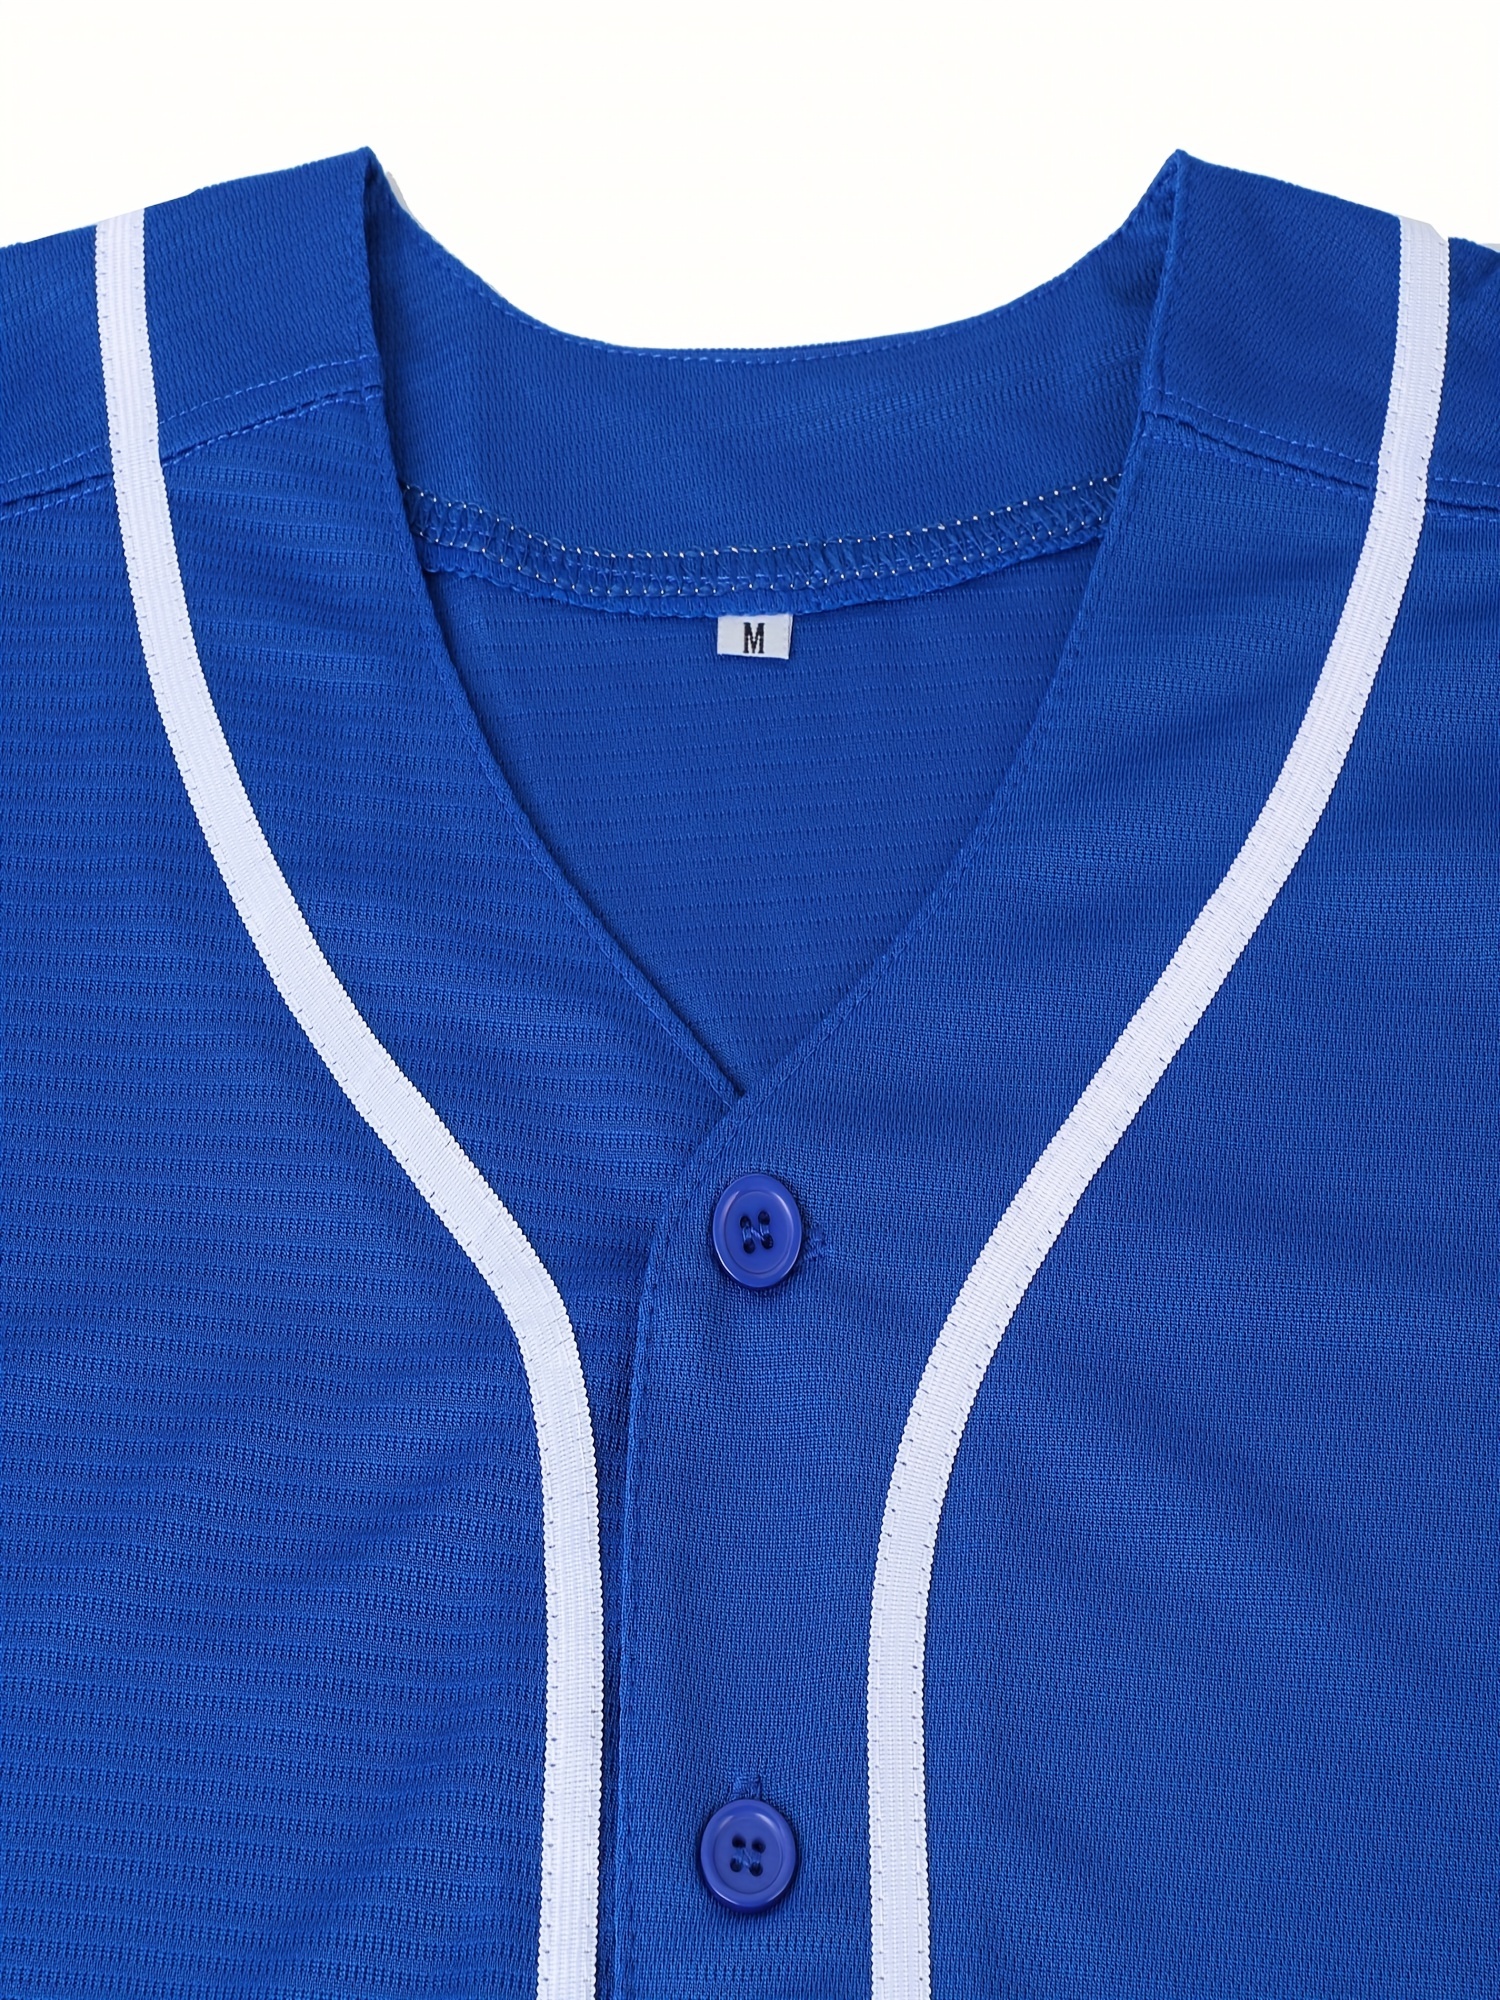 Baseball Jersey Blank V-Neck Full Button Shirts Men/Boy Breathable Softball Uniform Any Color